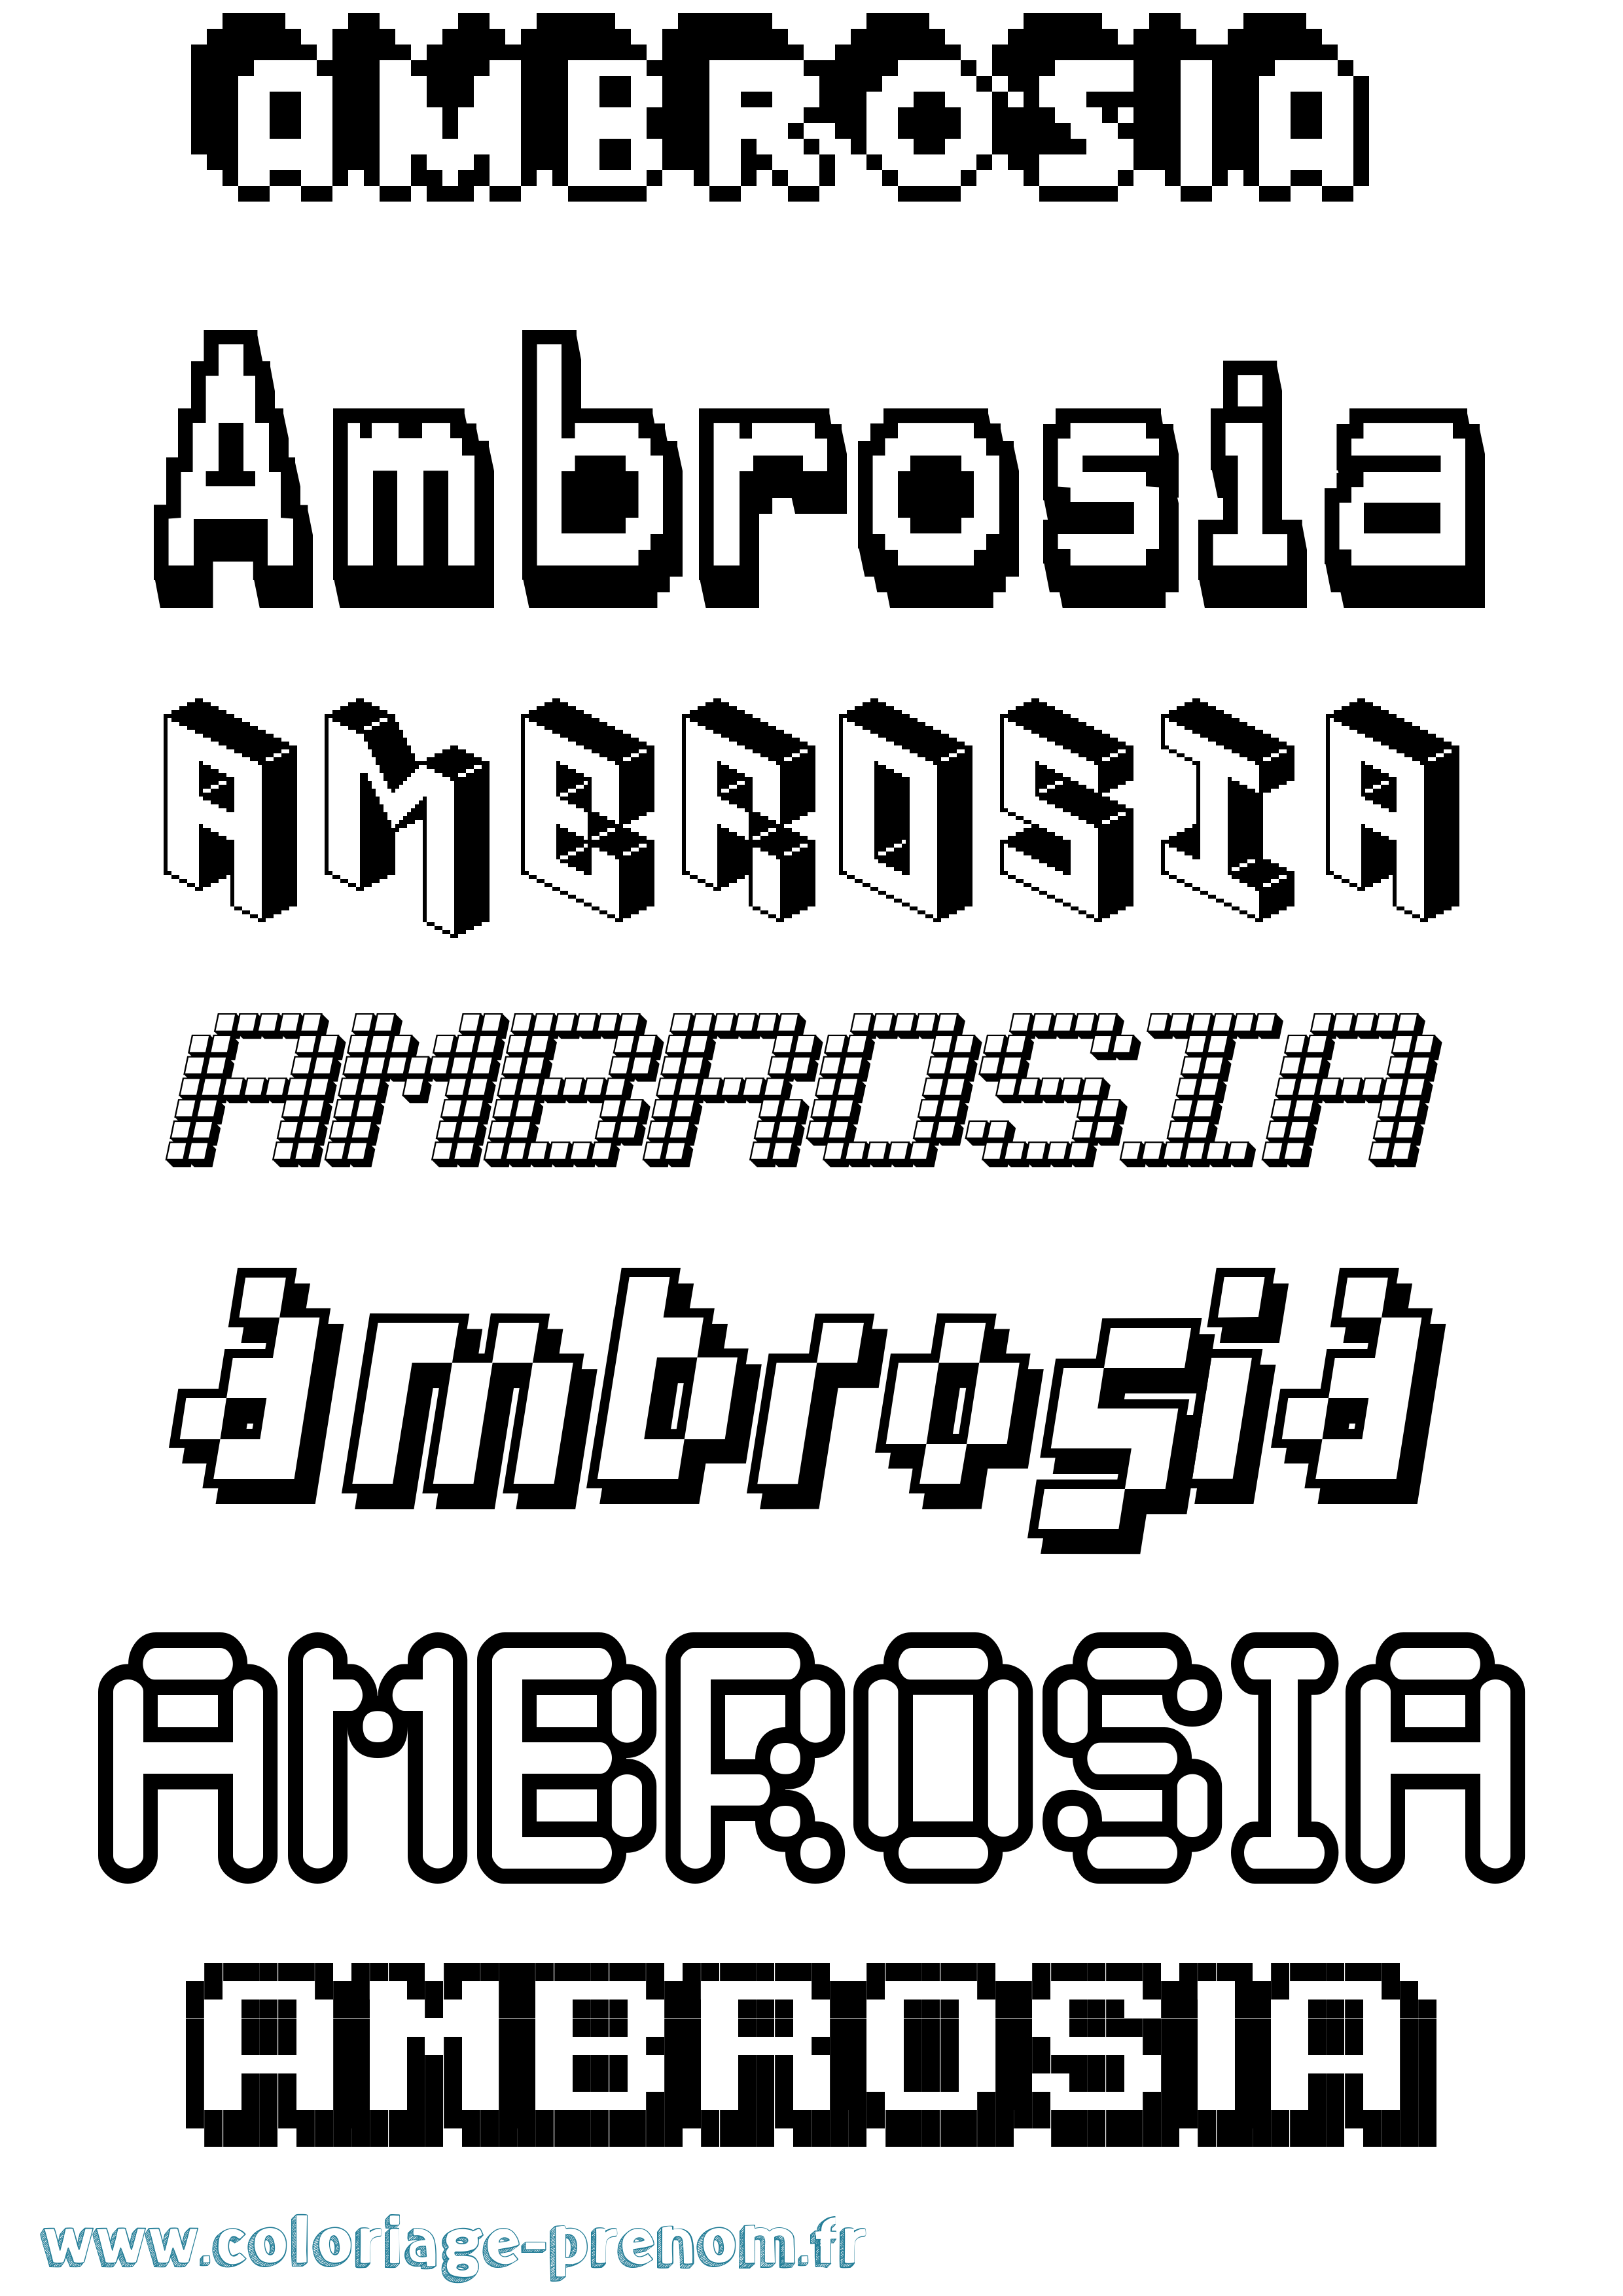 Coloriage prénom Ambrosia Pixel